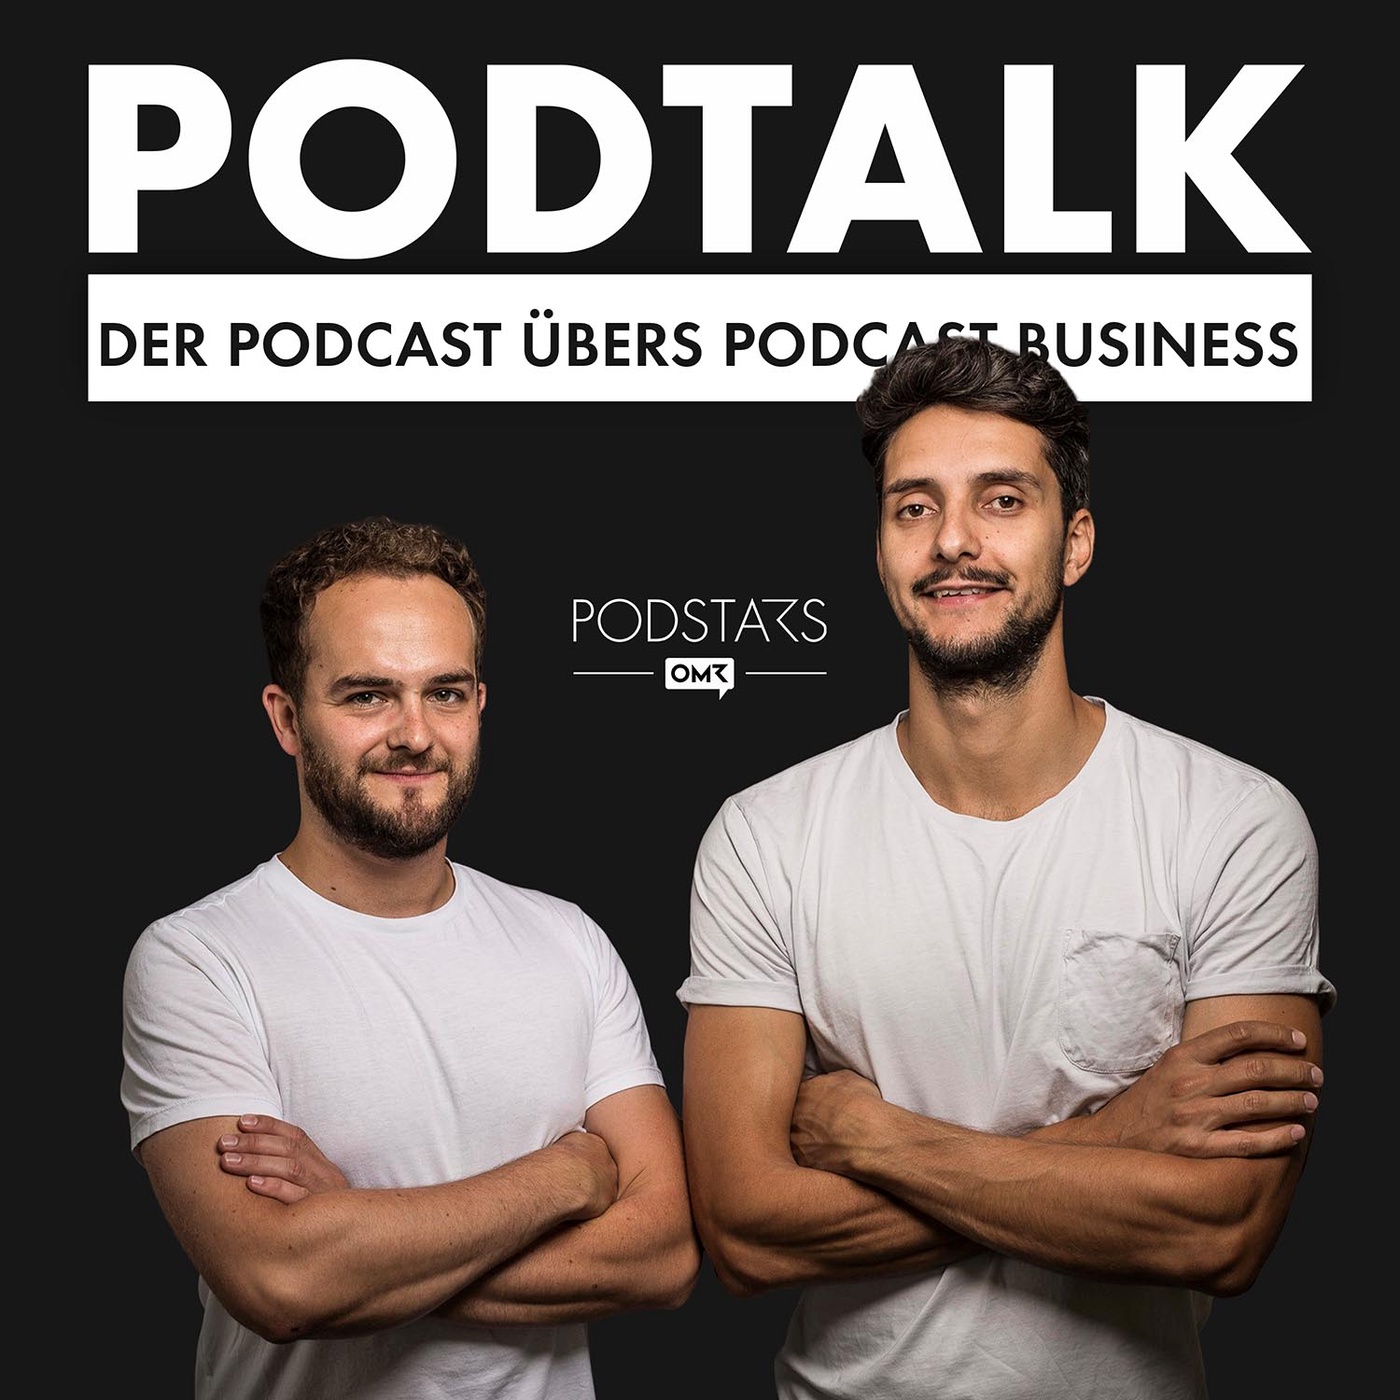 PodTalk #42: How to Podcast Marketing - mit Paula Thurm vom Podcast Marketing Club